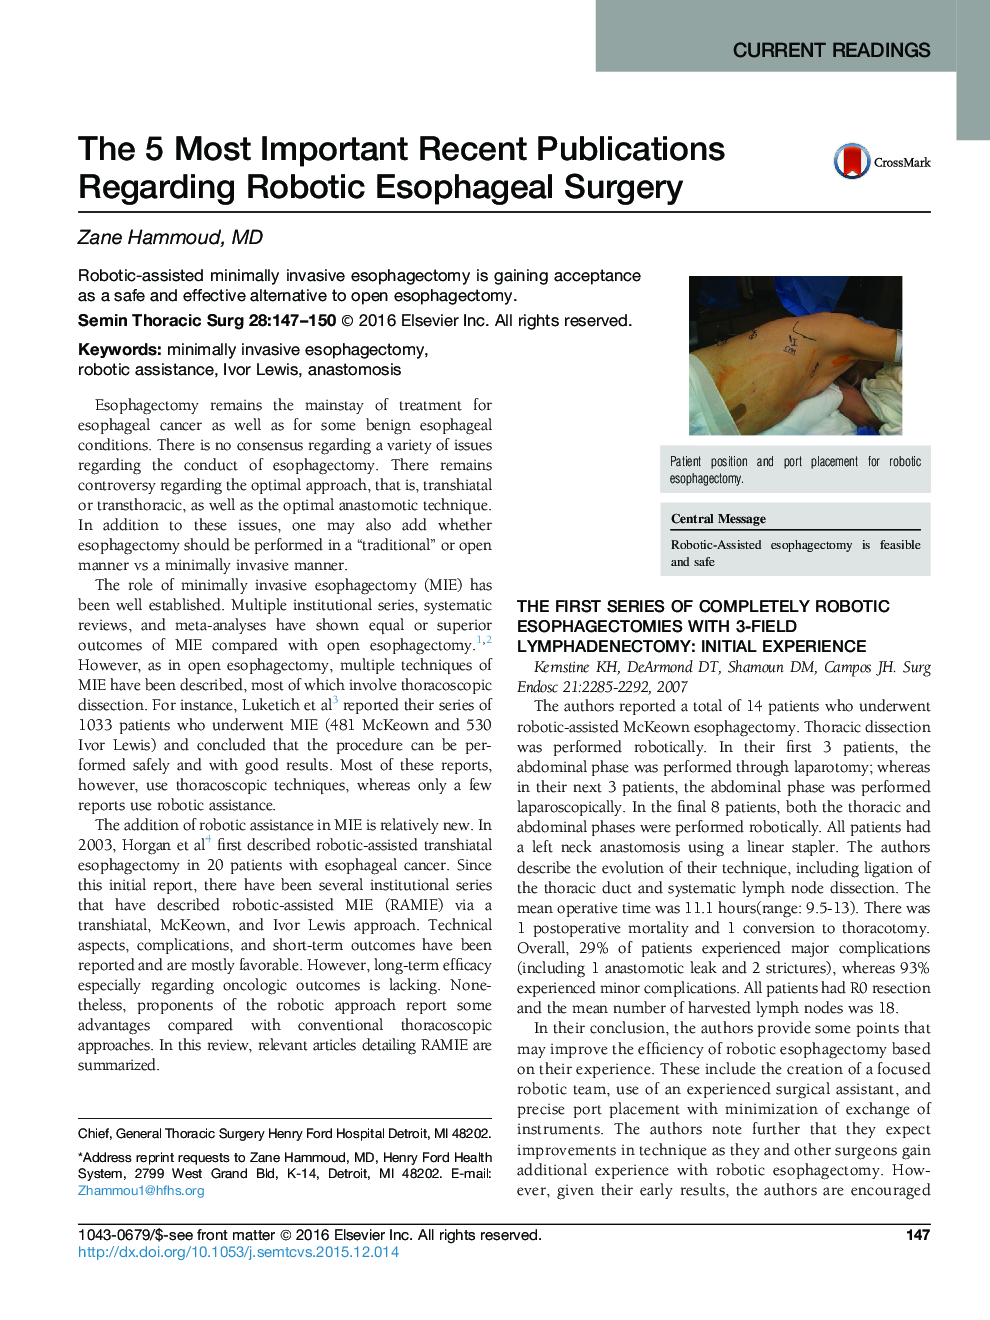 Current ReadingsThe 5 Most Important Recent Publications Regarding Robotic Esophageal Surgery